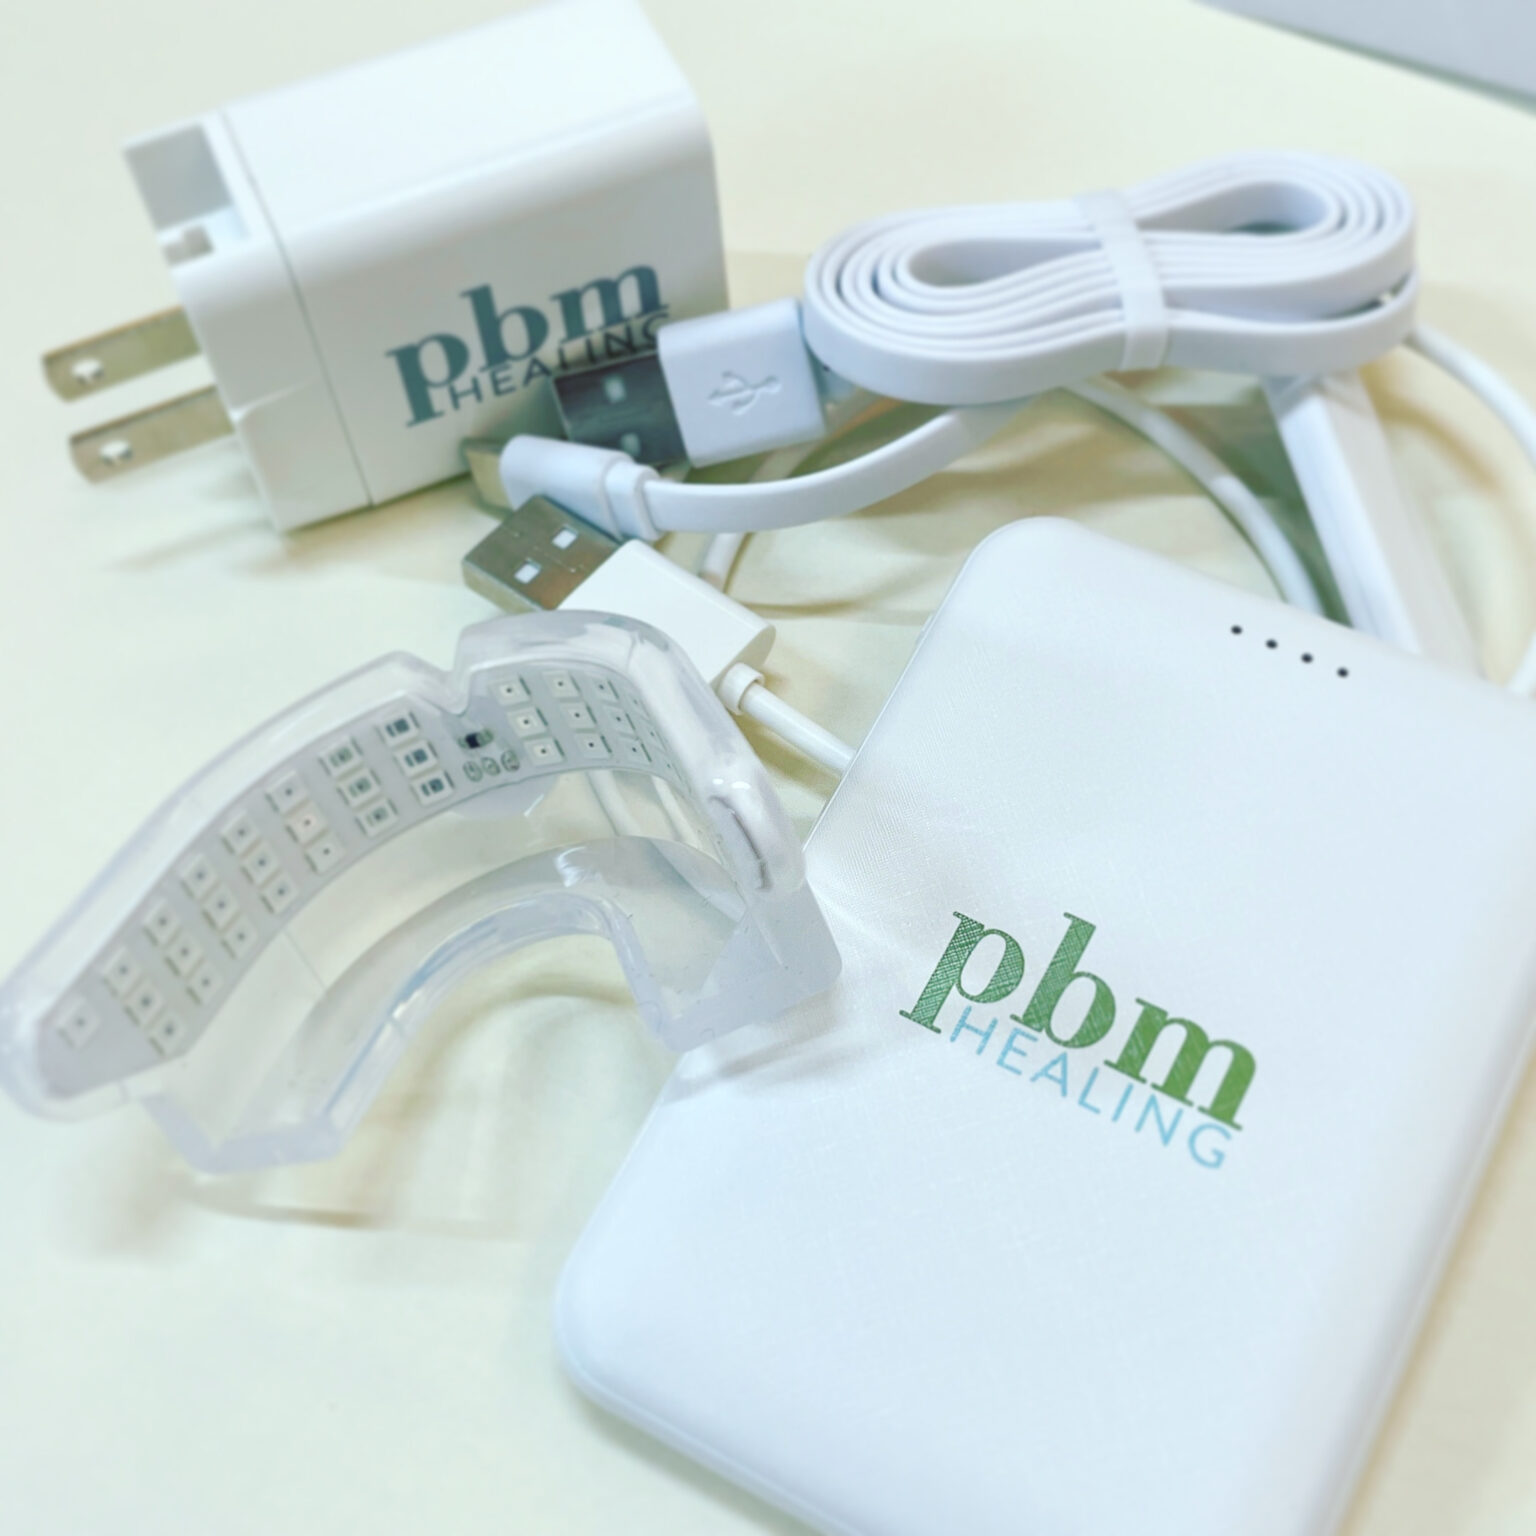 pbm healing オルソパルス 光加速装置 インビザライン - オーラルケア